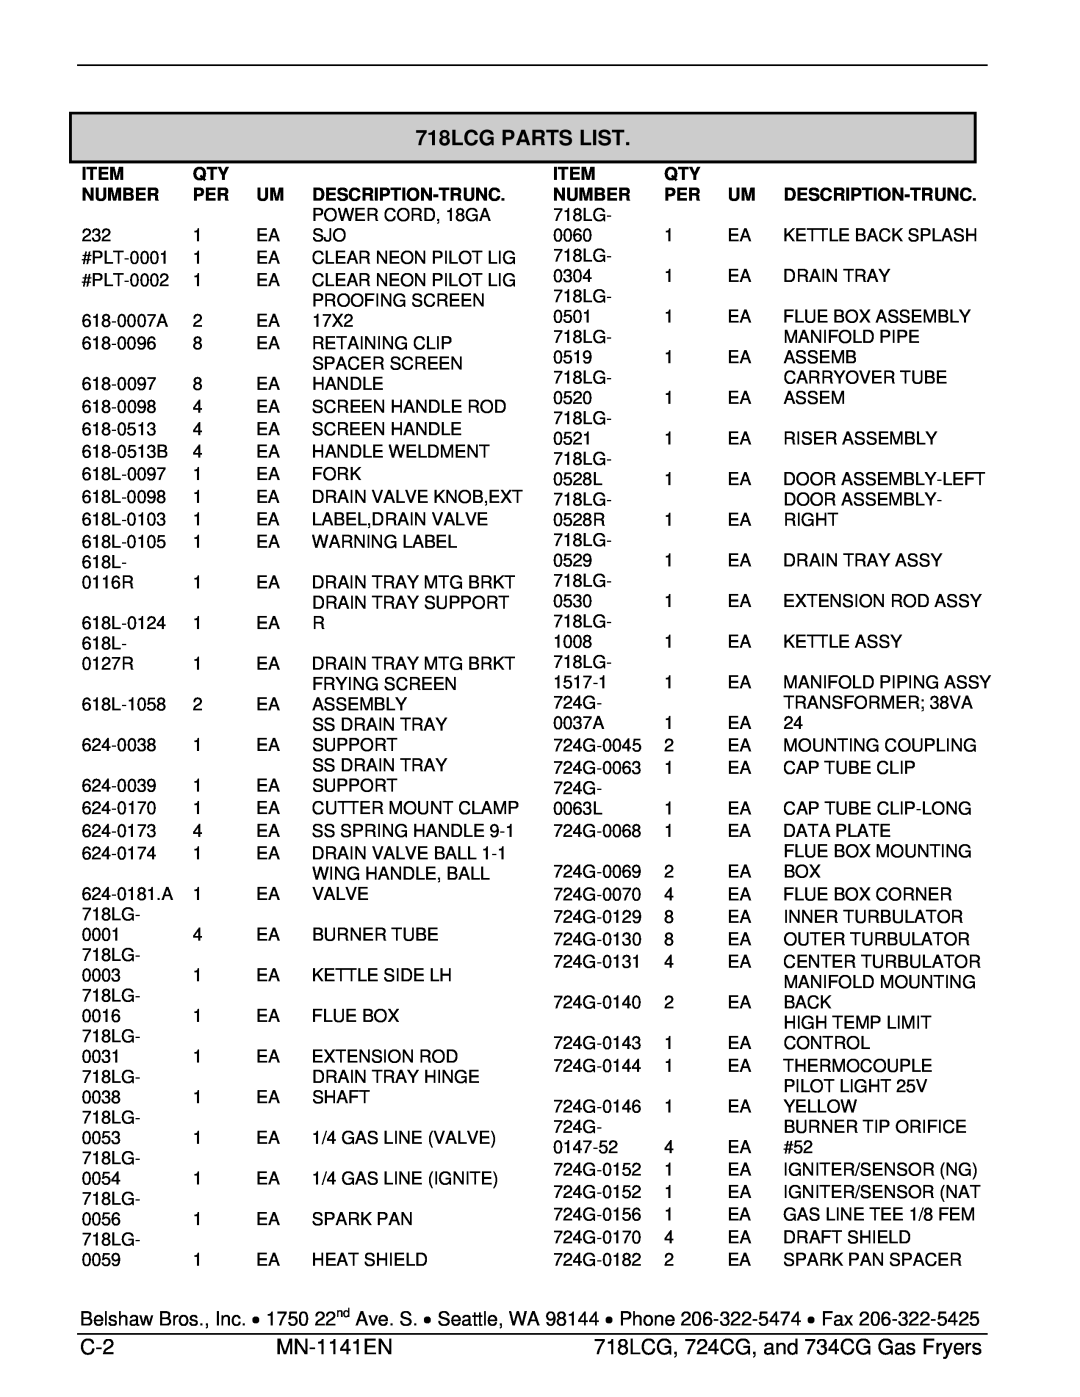 Belshaw Brothers manual 718LCG PARTS LIST, MN-1141EN, 718LCG, 724CG, and 734CG Gas Fryers, Number, Description-Trunc 